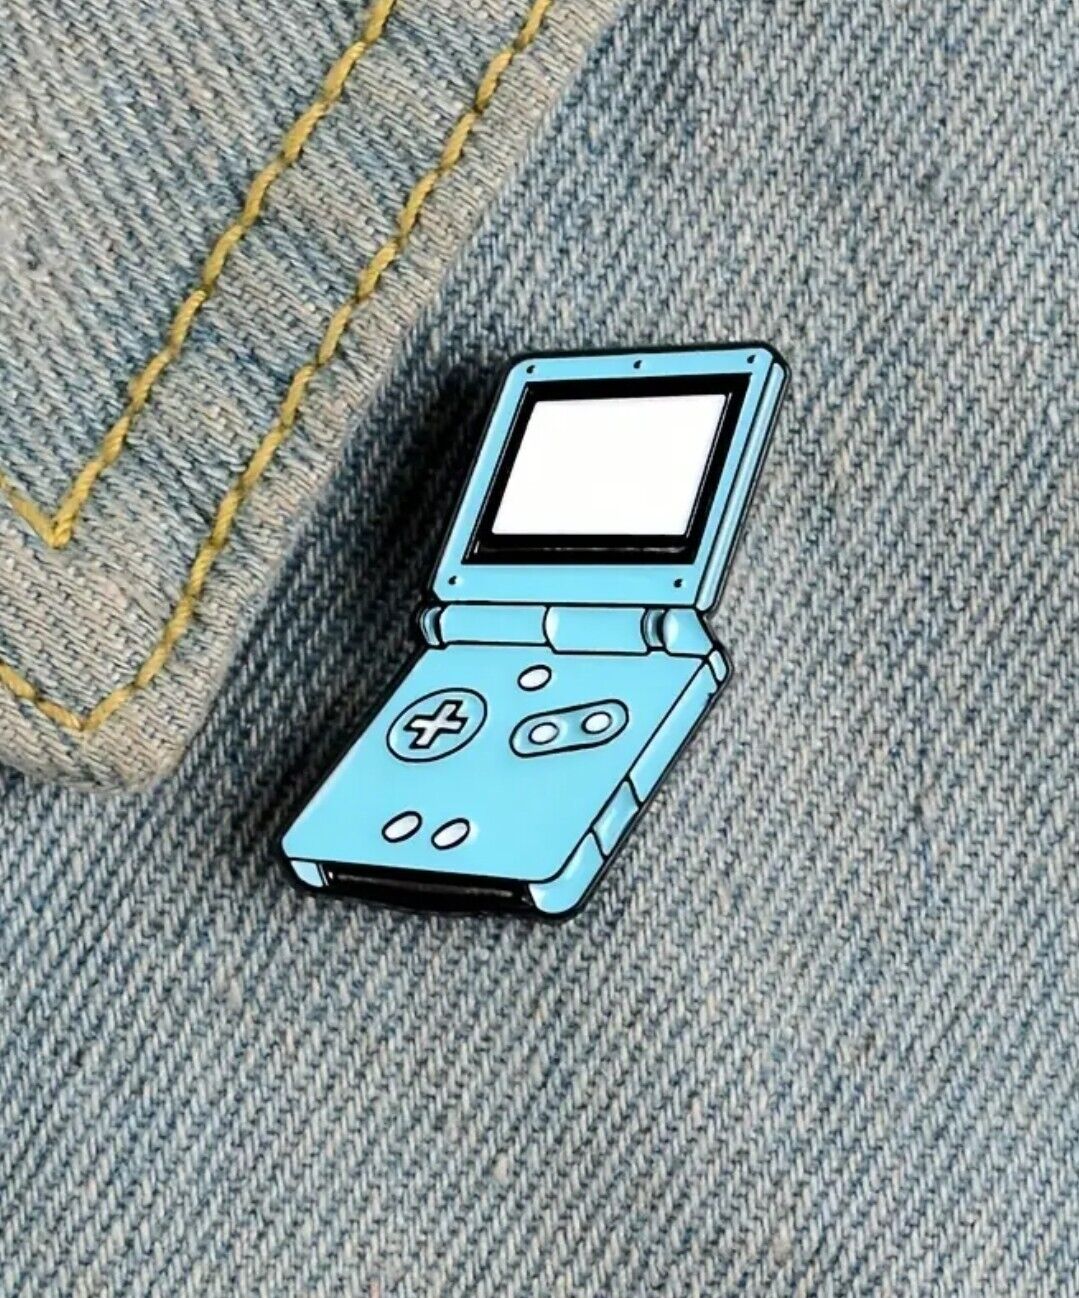 Nintendo Gameboy SP style Inspired Enamel Pin Badge Retro Video Game Handheld